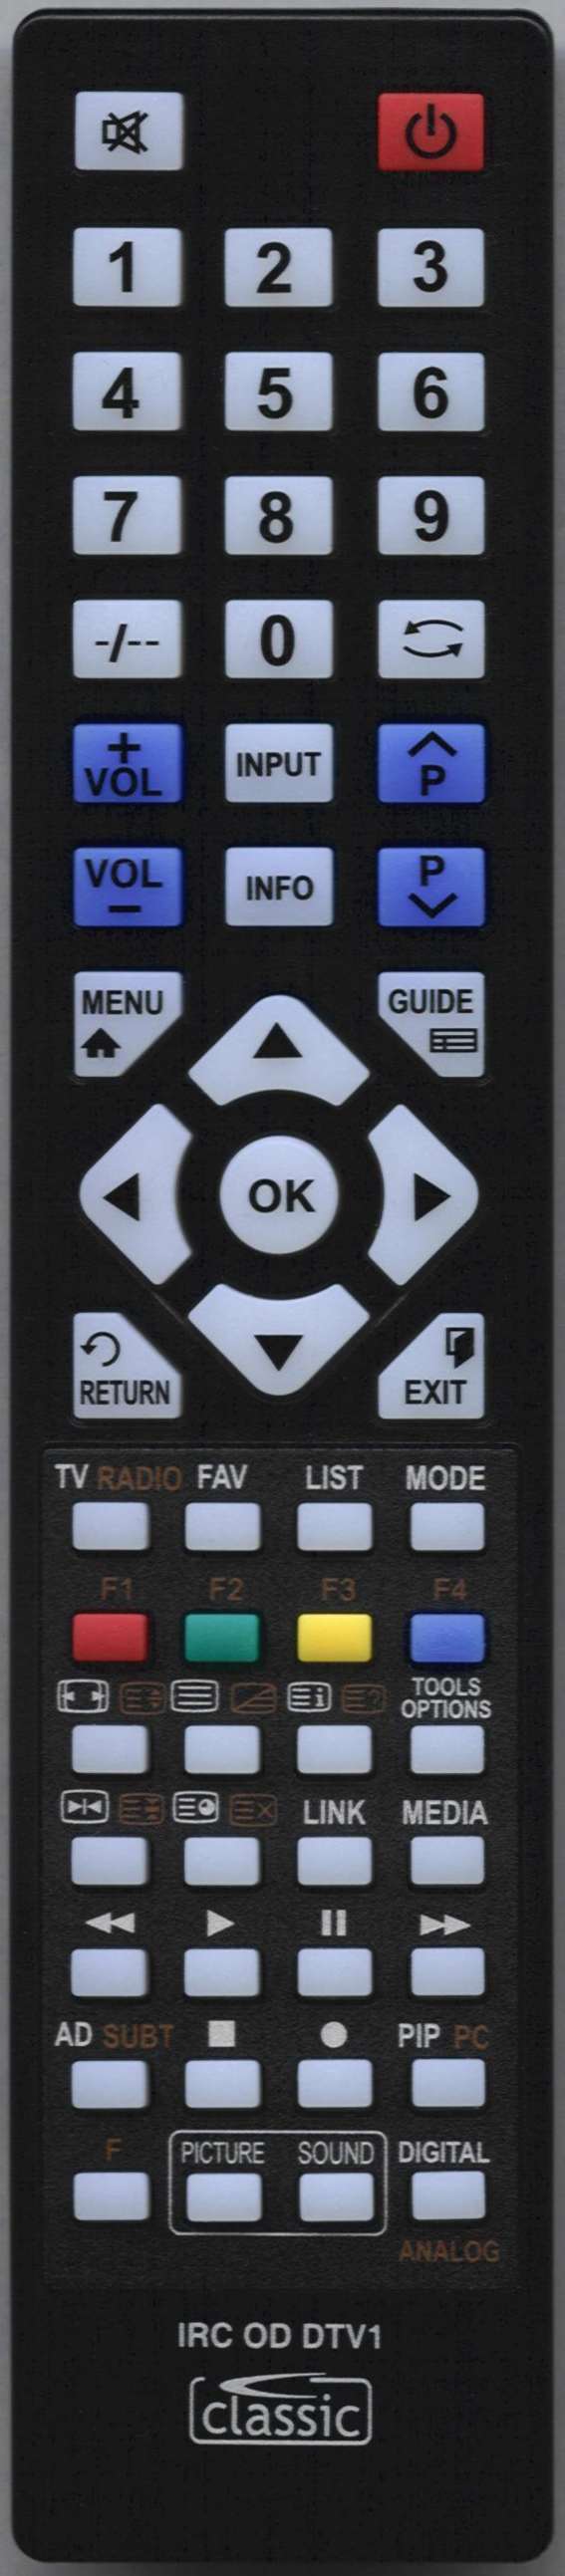 SONY KDL40R473A Remote Control Alternative